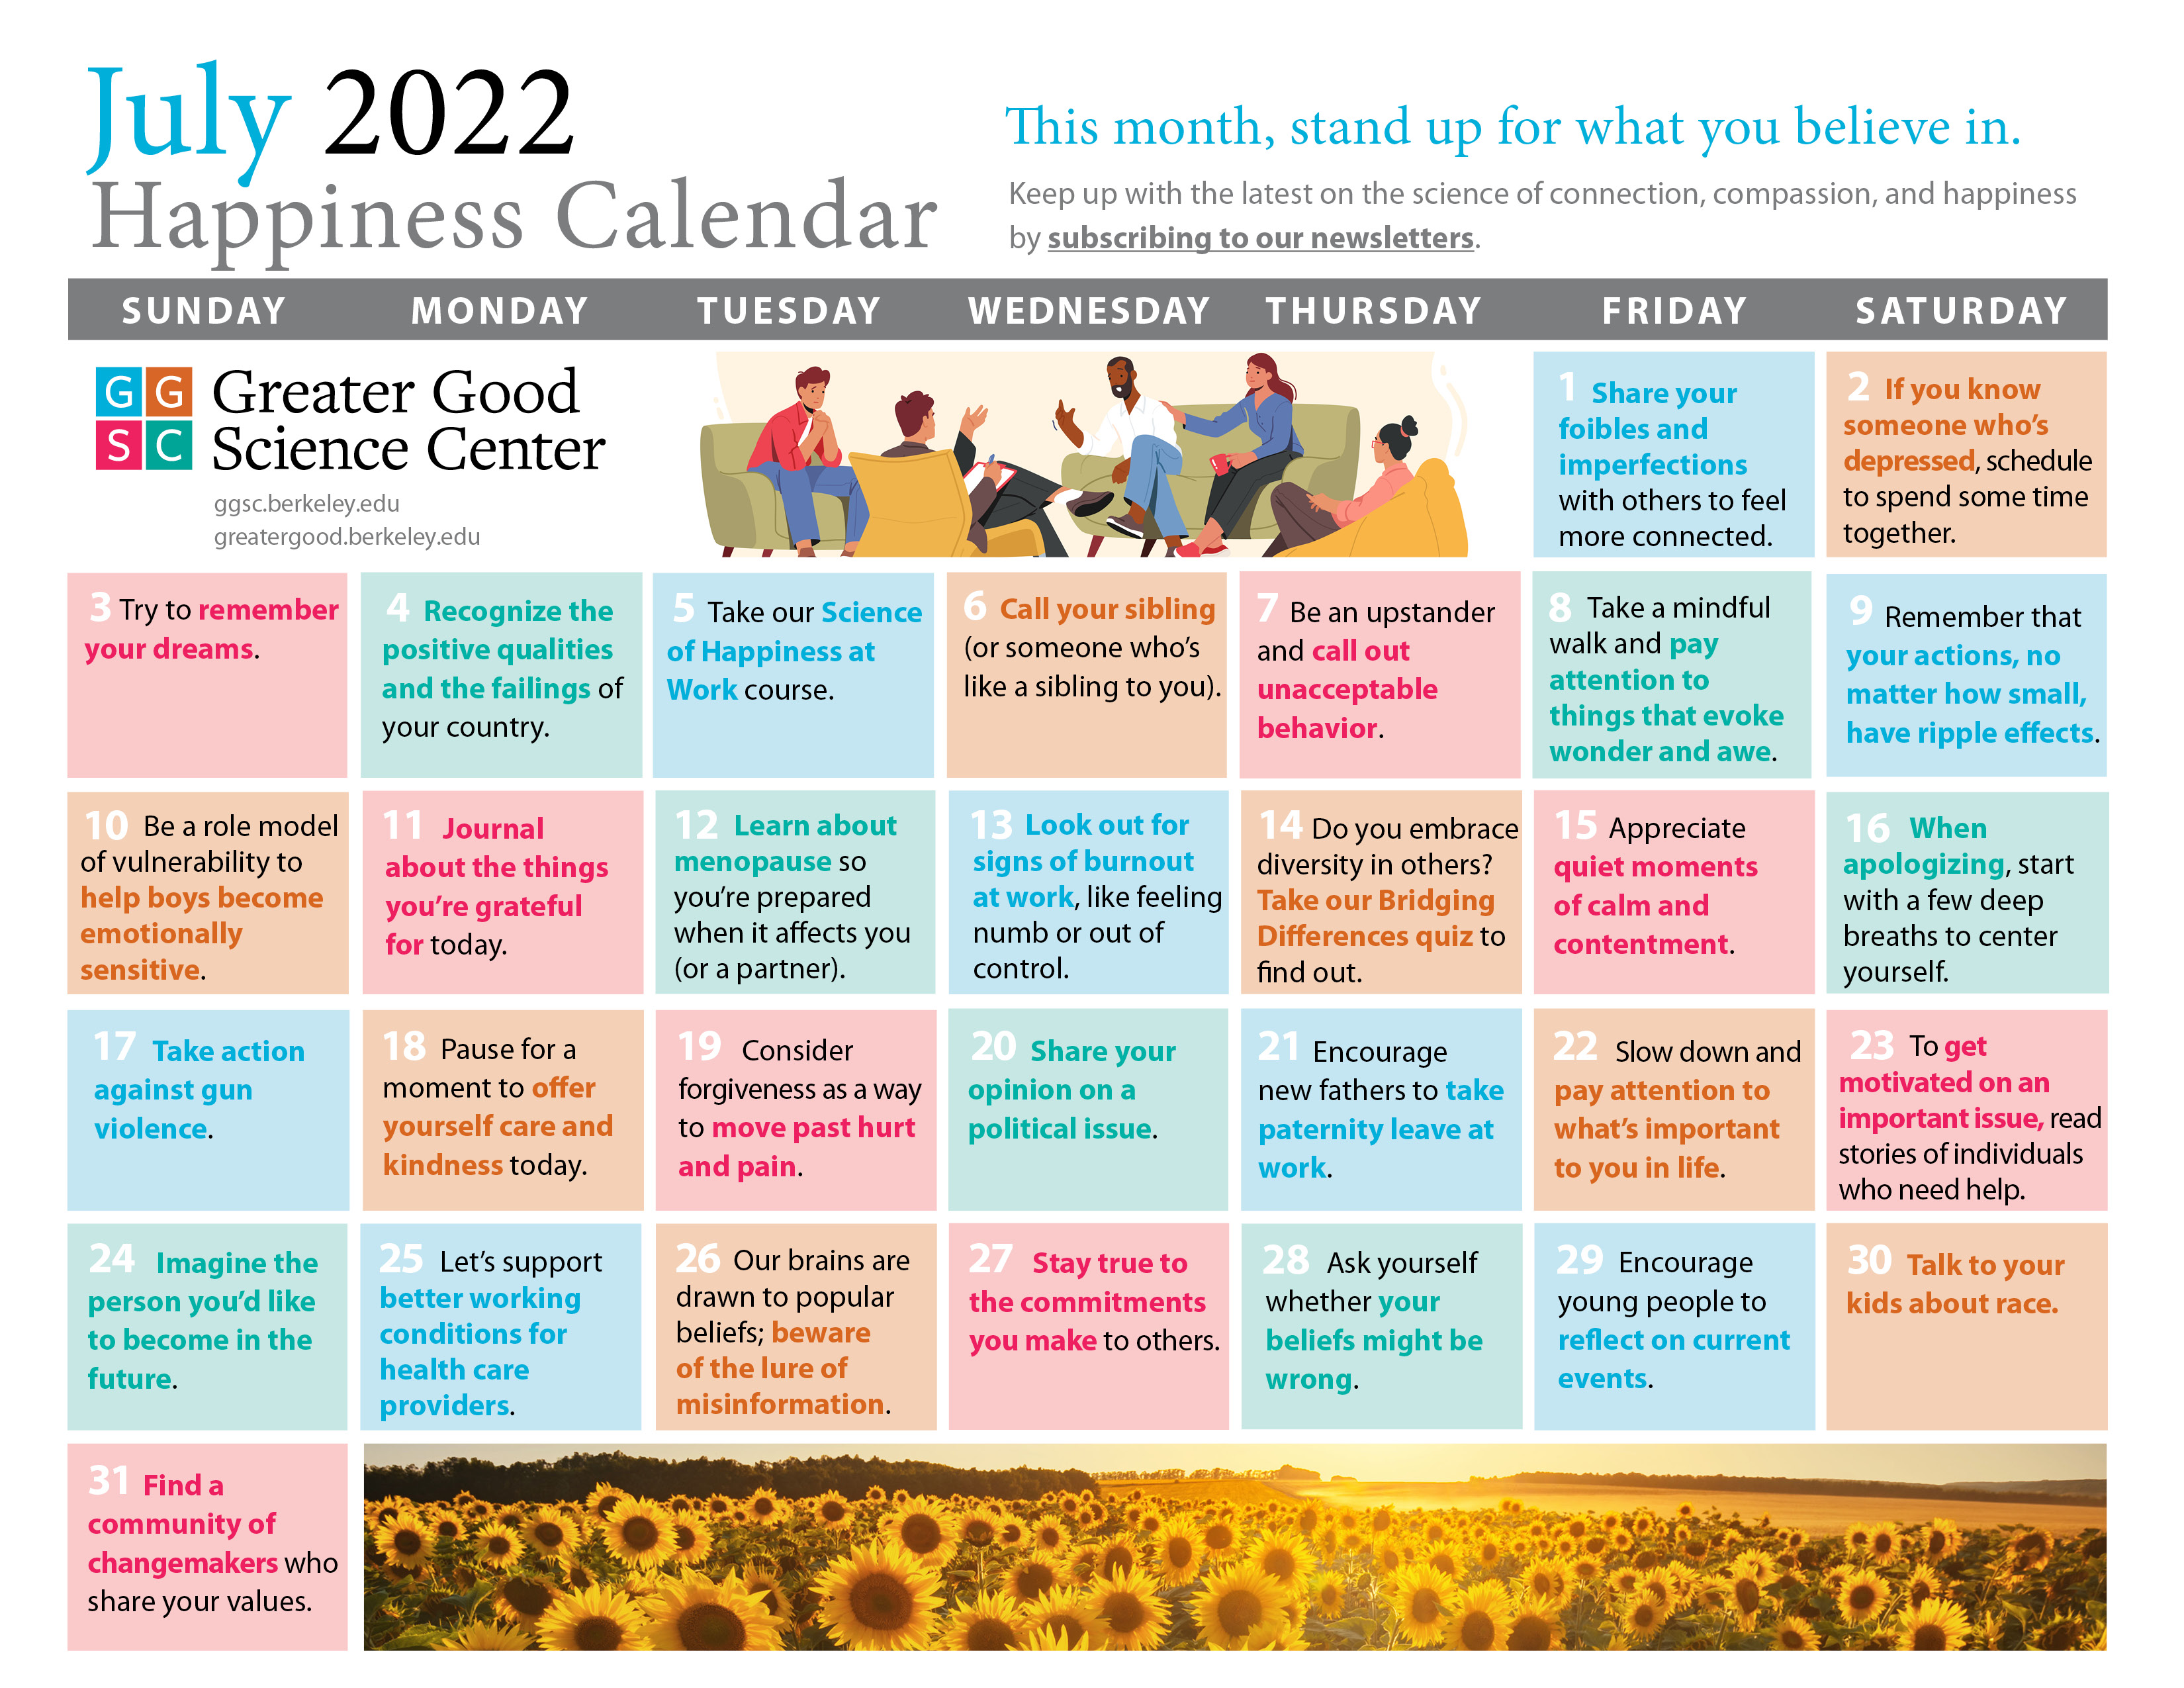 July 2022 happiness calendar